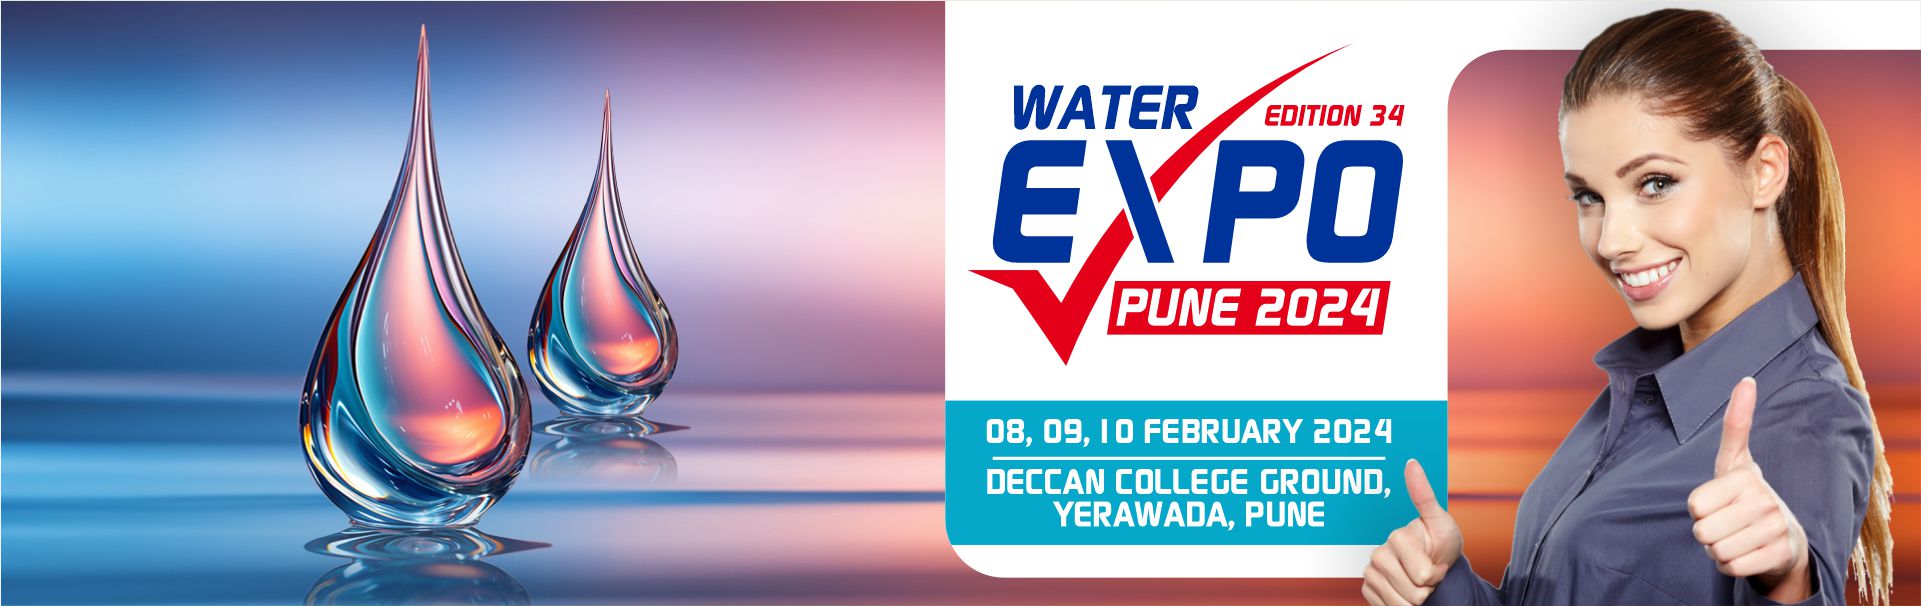 Water Expo Pune 2024 